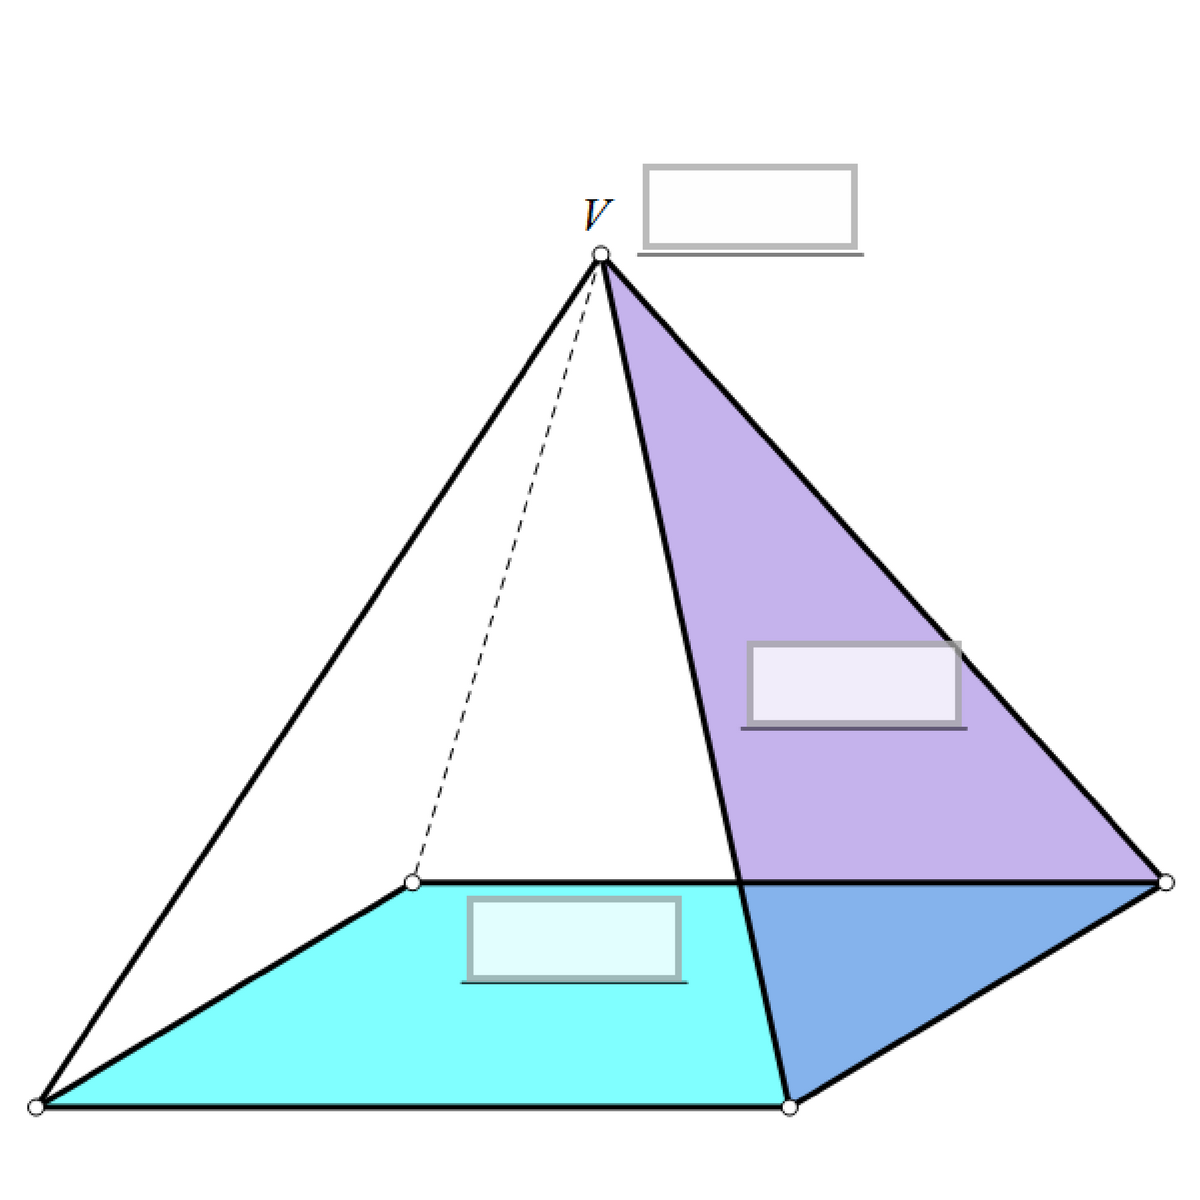 Na slici je pravilna četverostrana piramida s istaknutom bazom i jednom pobočkom